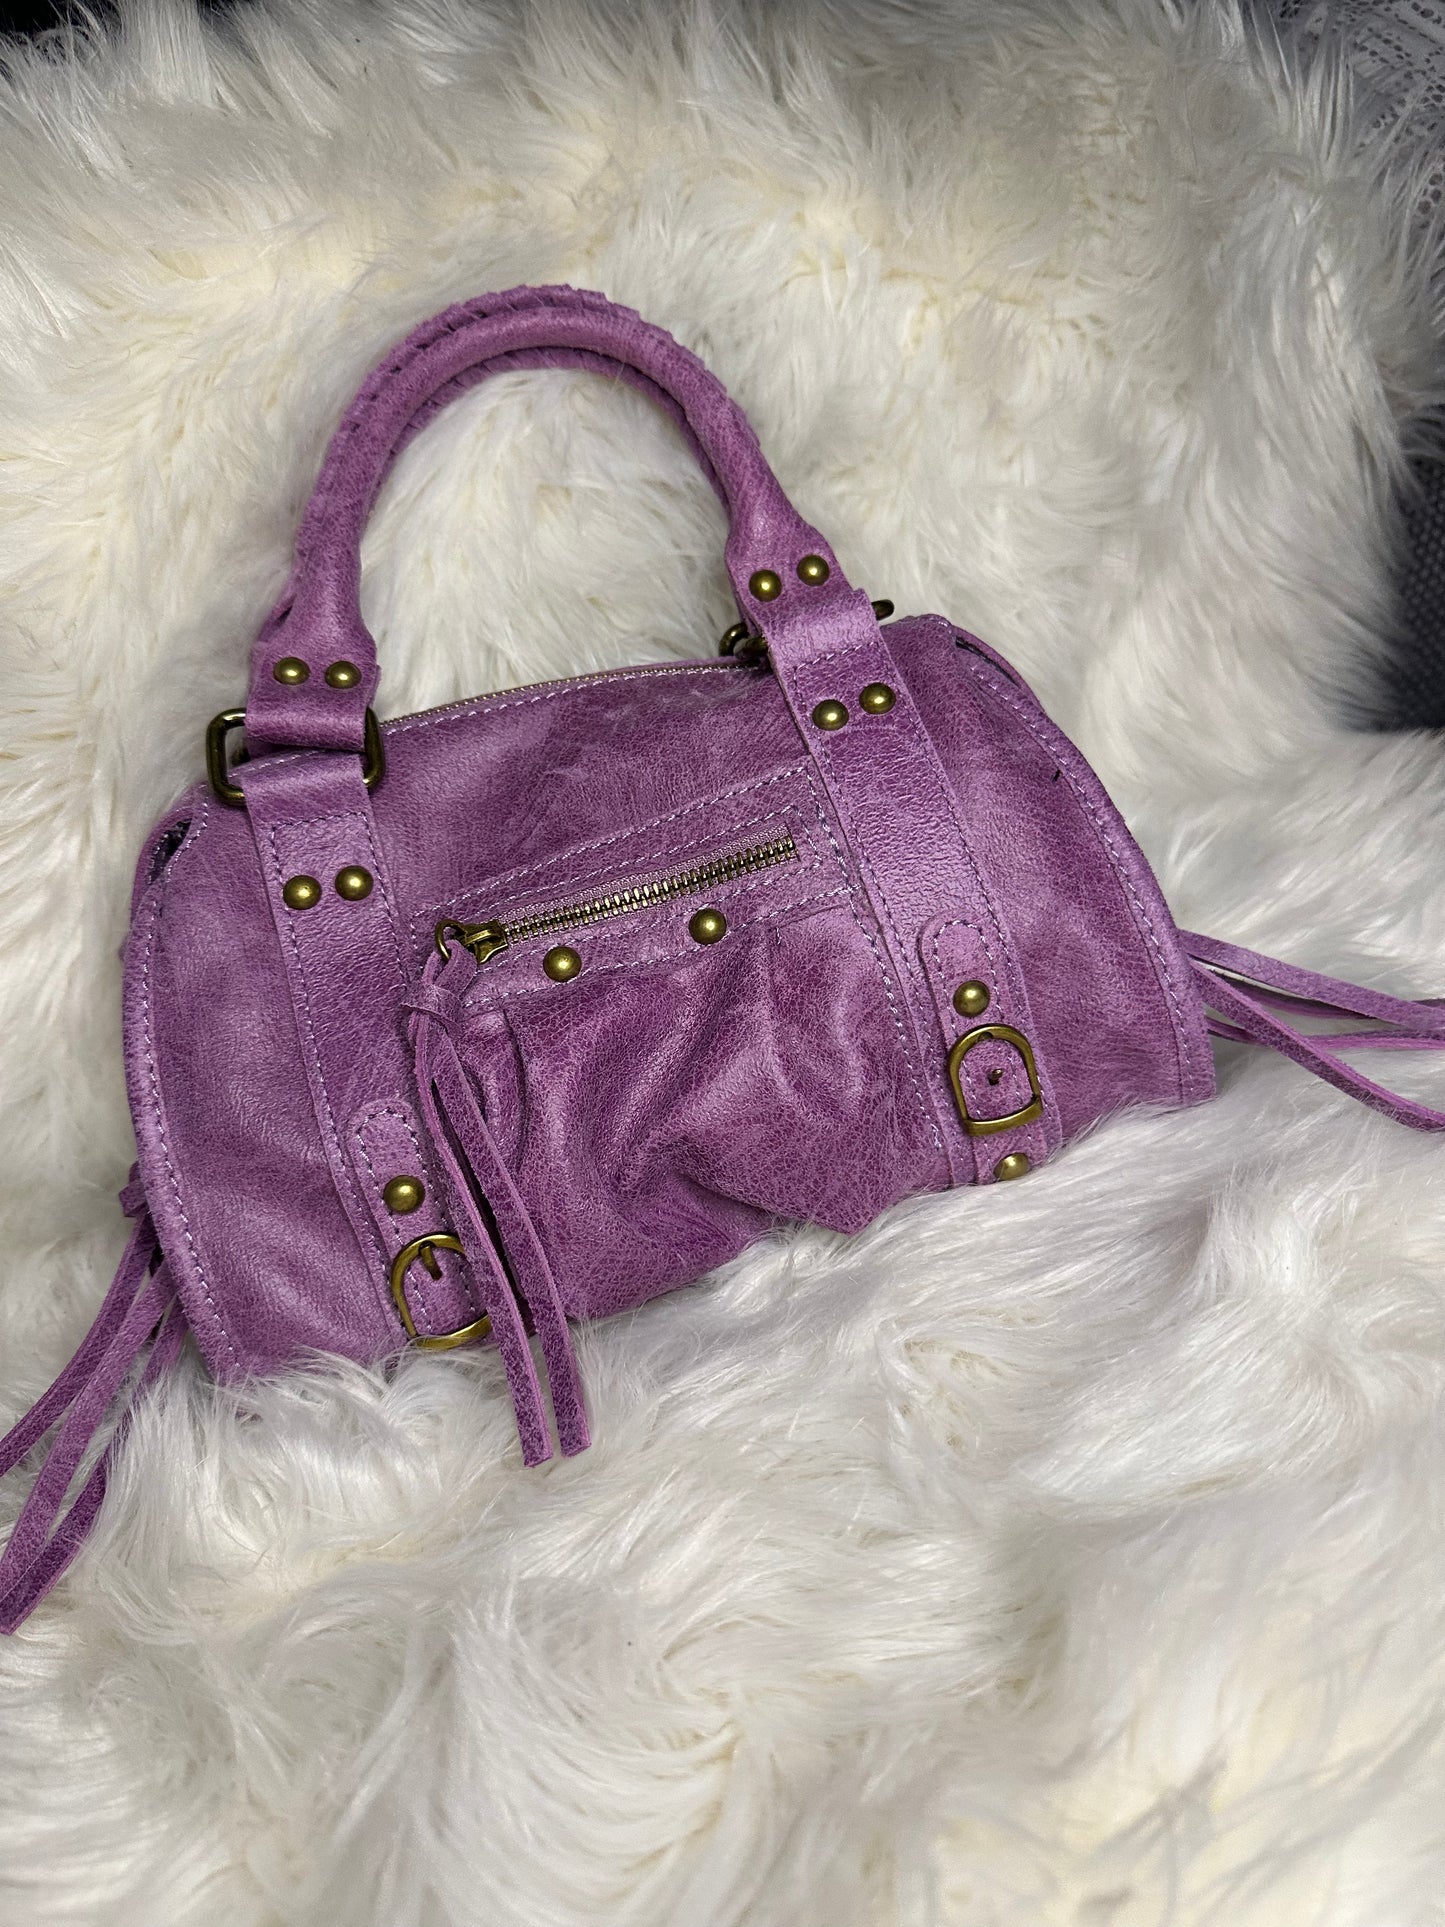 Jolie bag purple